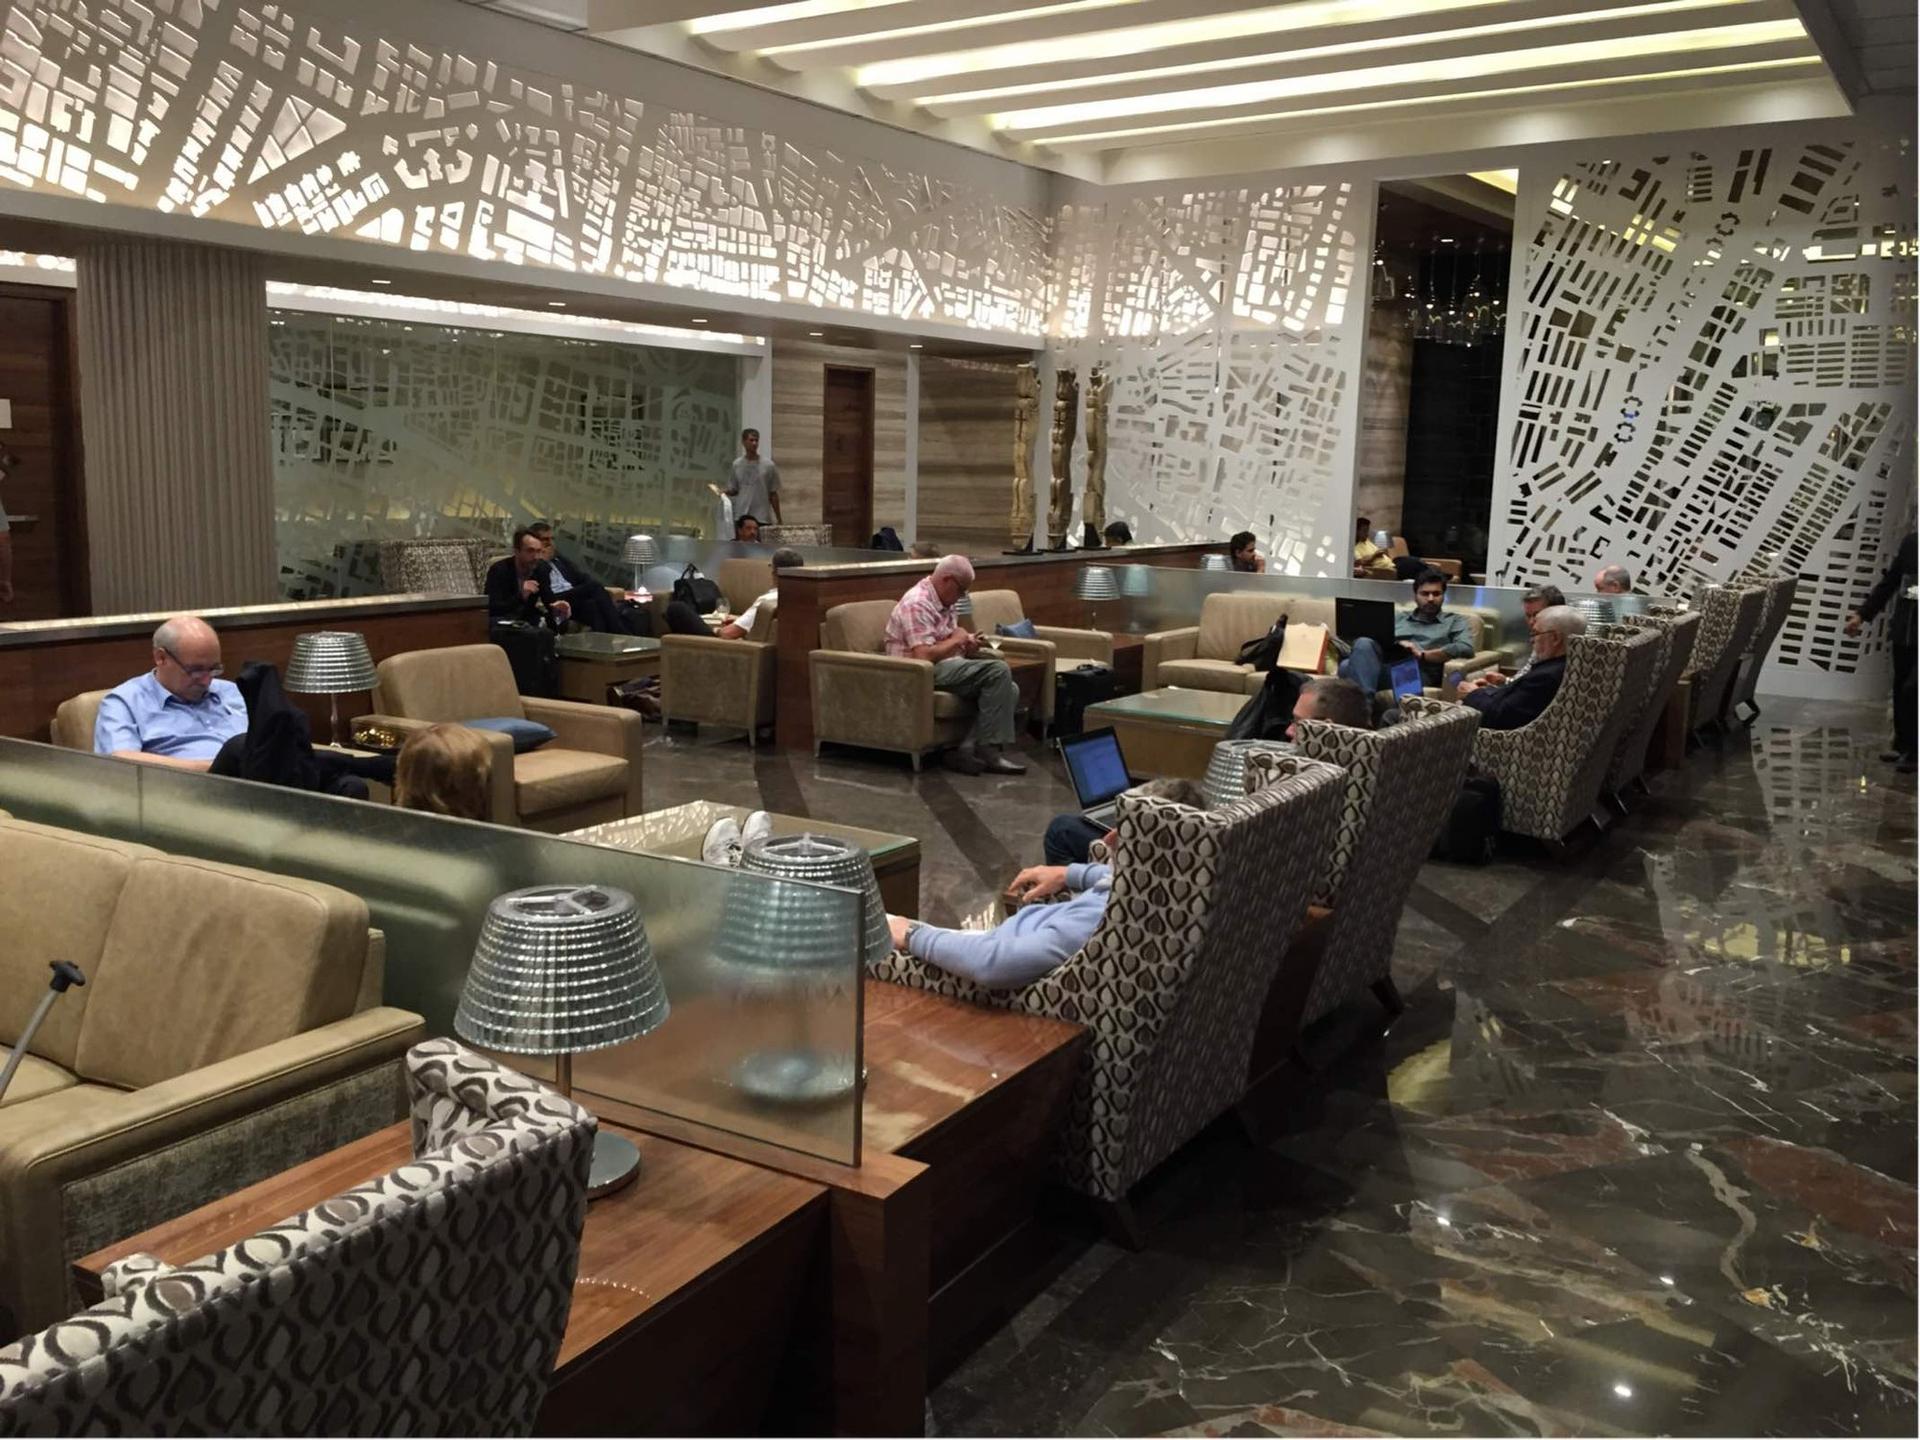 Adani Lounge (International West Wing) image 5 of 60